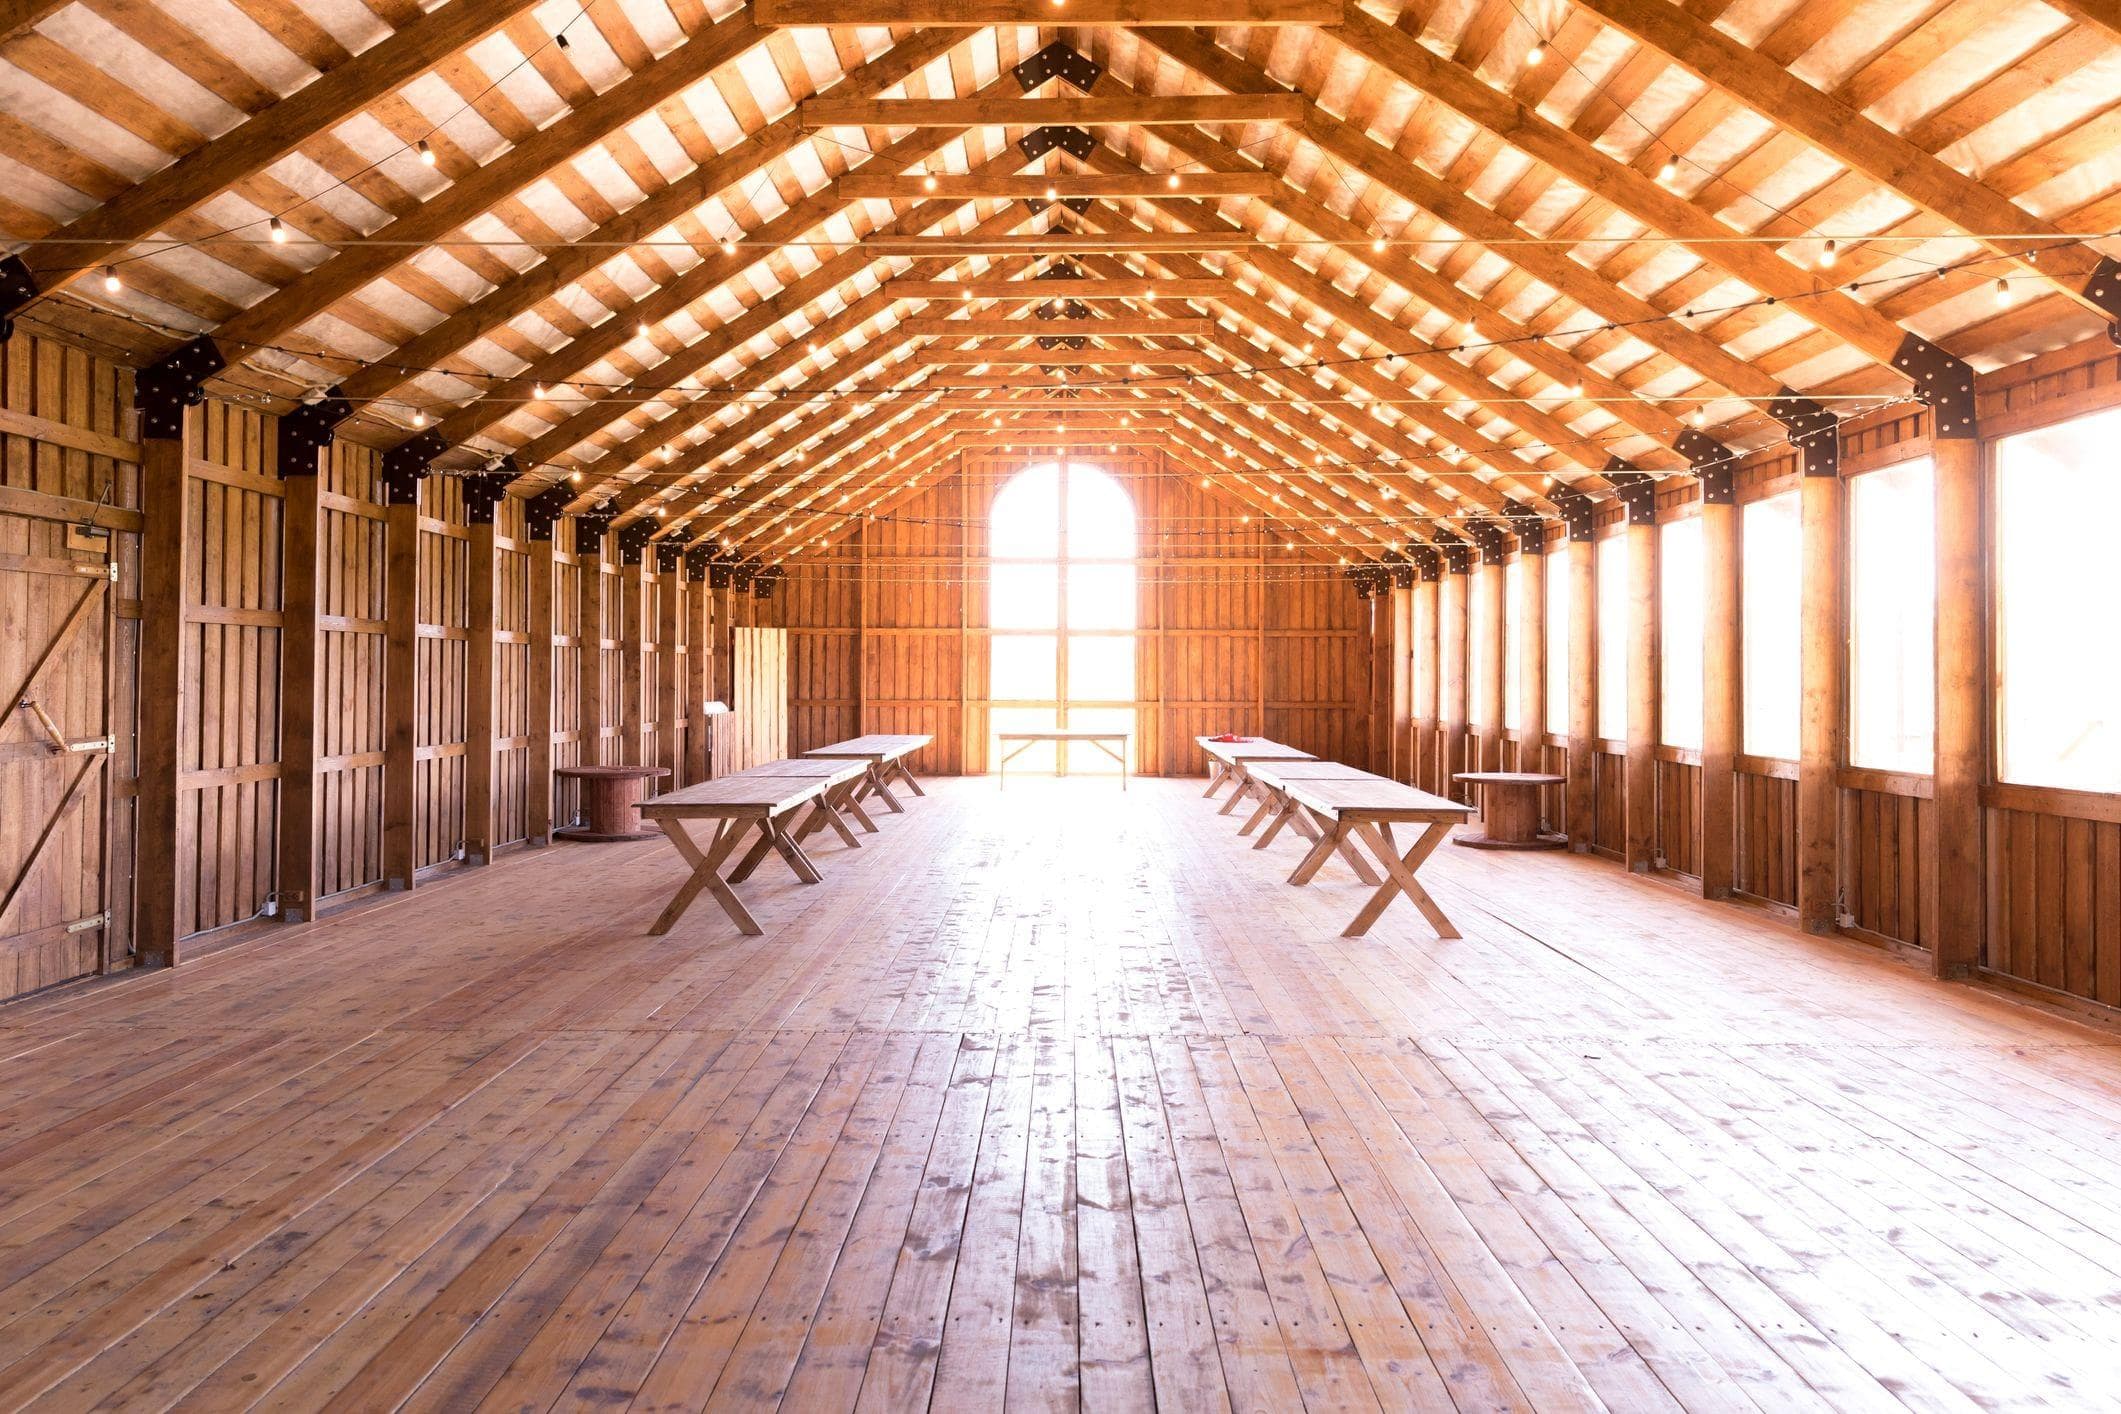 rustic wooden interior of a converted barn venue